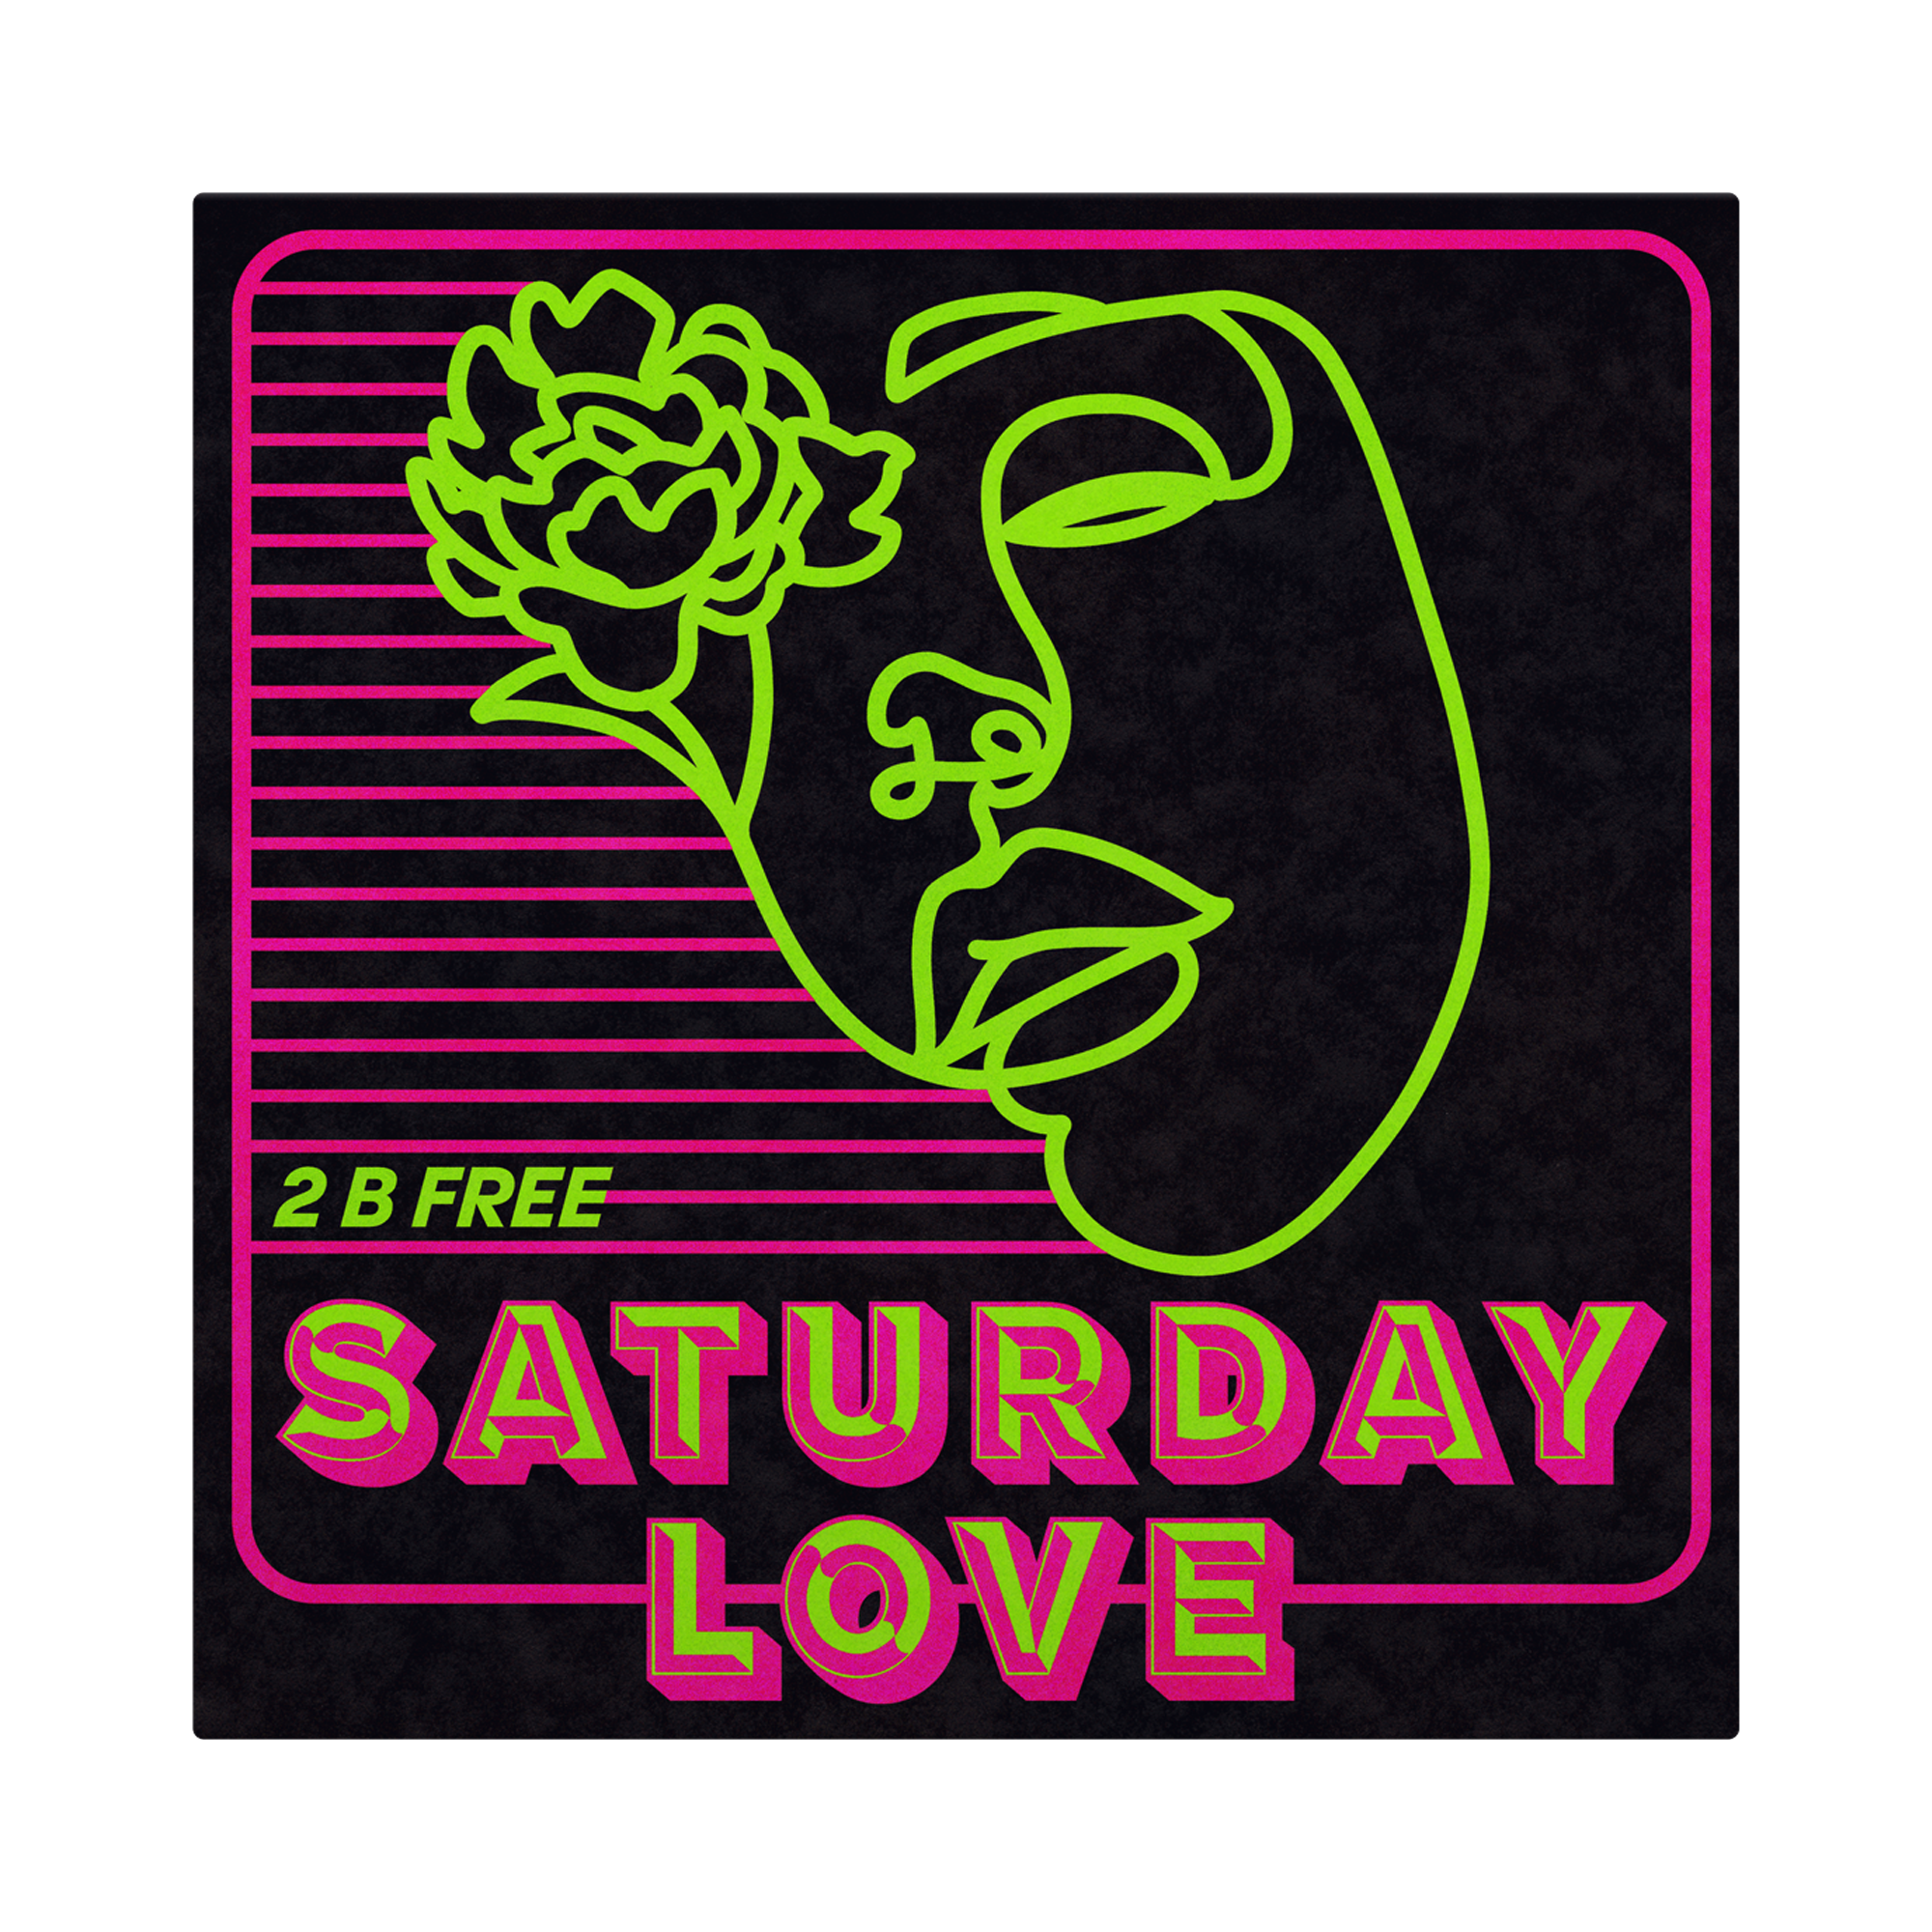 Saturday Love "2 B Free" Color Vinyl 12"